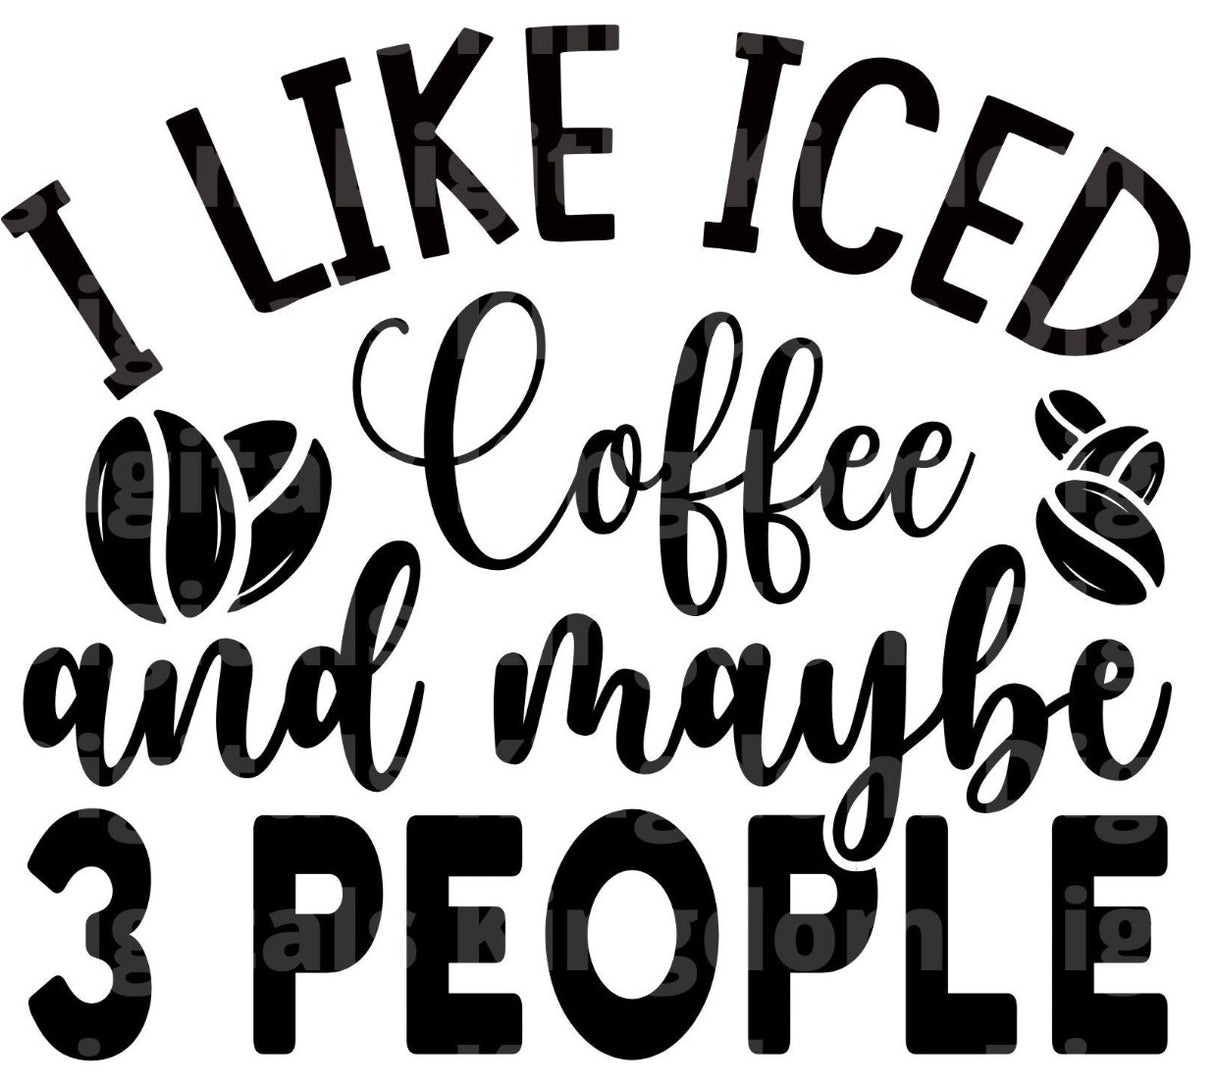 I Like Iced Coffee & maybe 3 People SVG Cut File